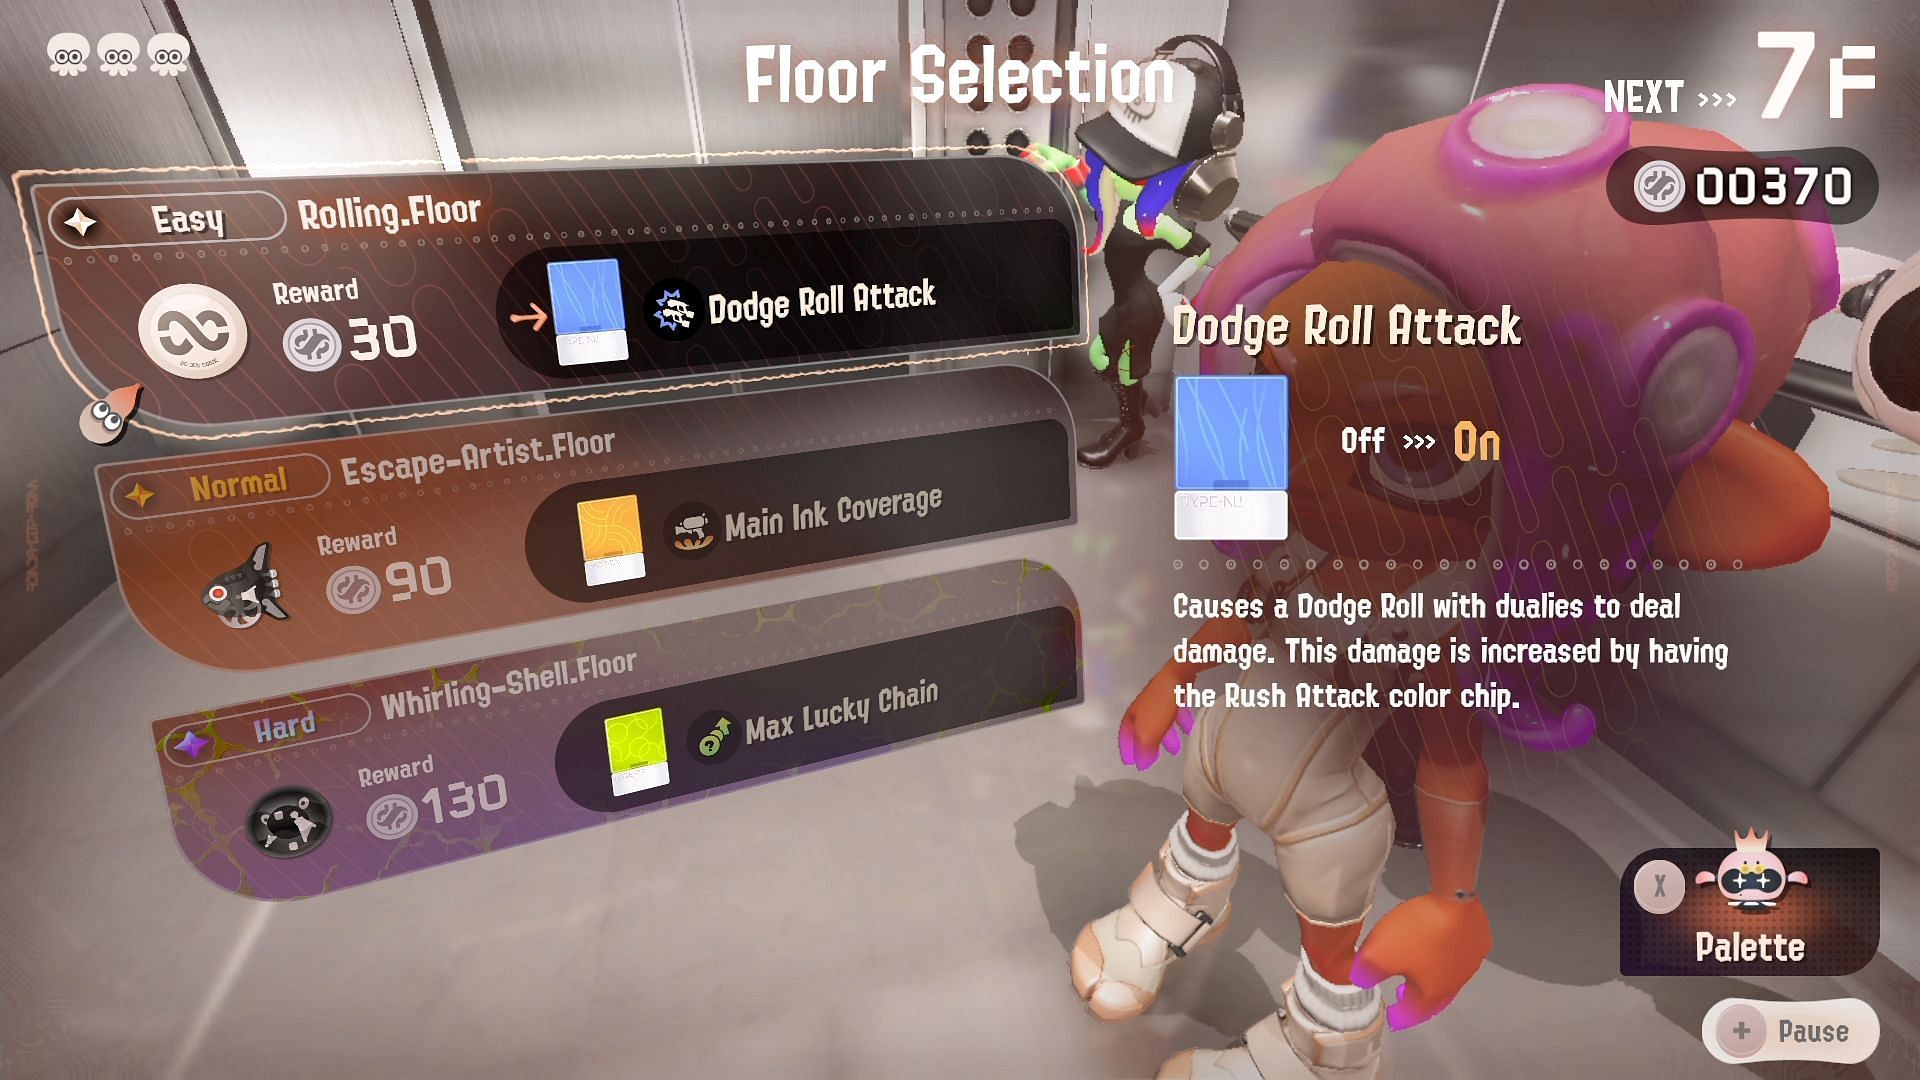 The floor selection menu. (Image via Nintendo)